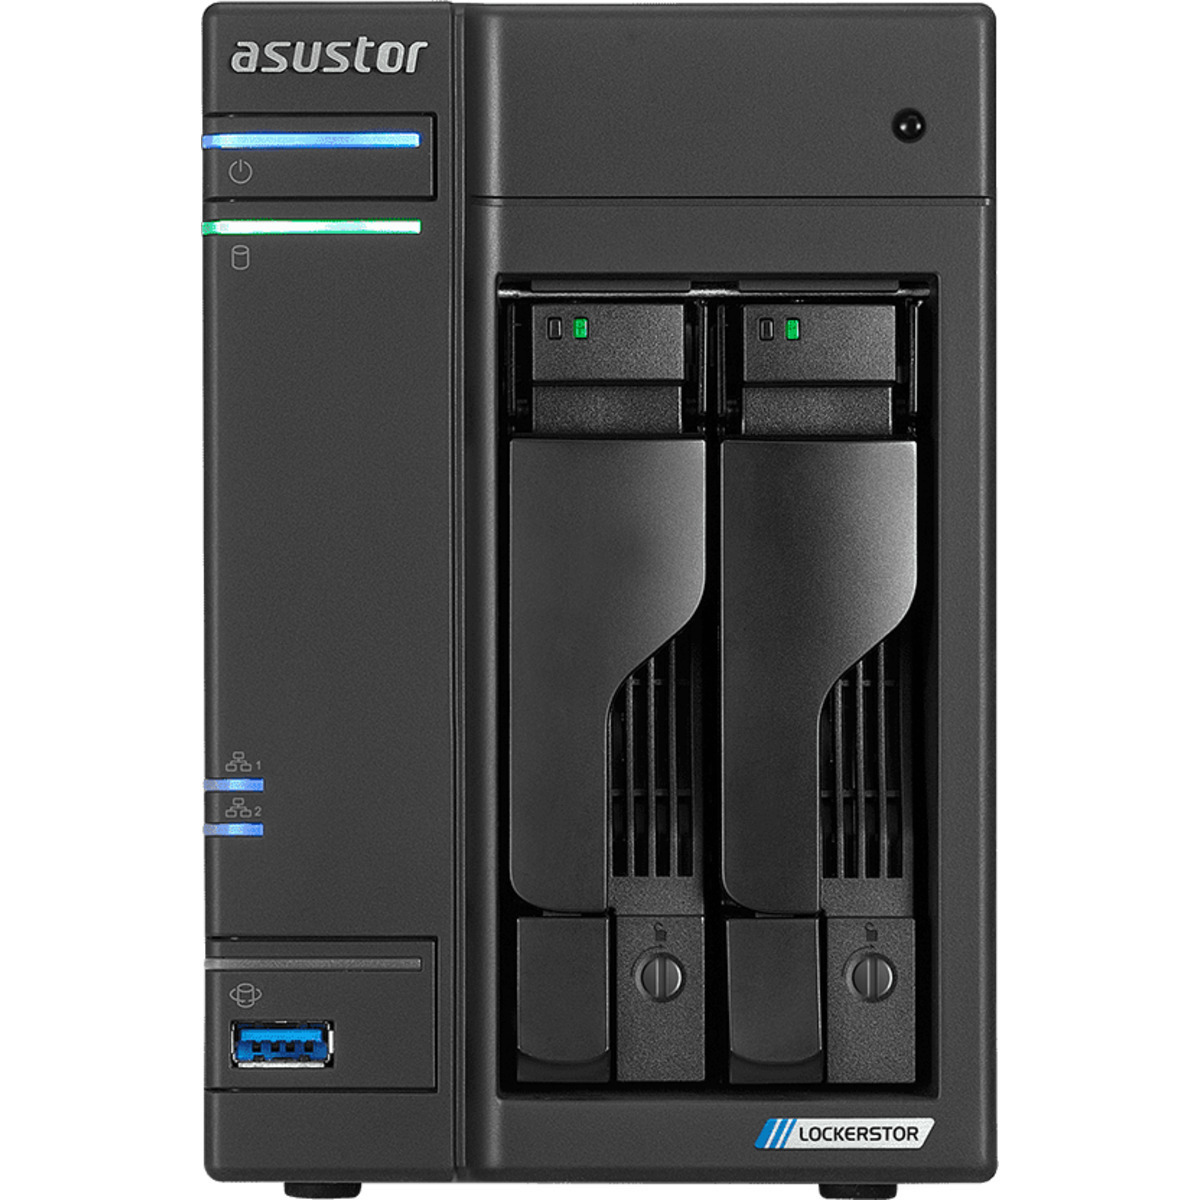 ASUSTOR AS6602T Lockerstor 2 6tb 2-Bay Desktop Multimedia / Power User / Business NAS - Network Attached Storage Device 1x6tb Western Digital Gold WD6003FRYZ 3.5 7200rpm SATA 6Gb/s HDD ENTERPRISE Class Drives Installed - Burn-In Tested - FREE RAM UPGRADE AS6602T Lockerstor 2